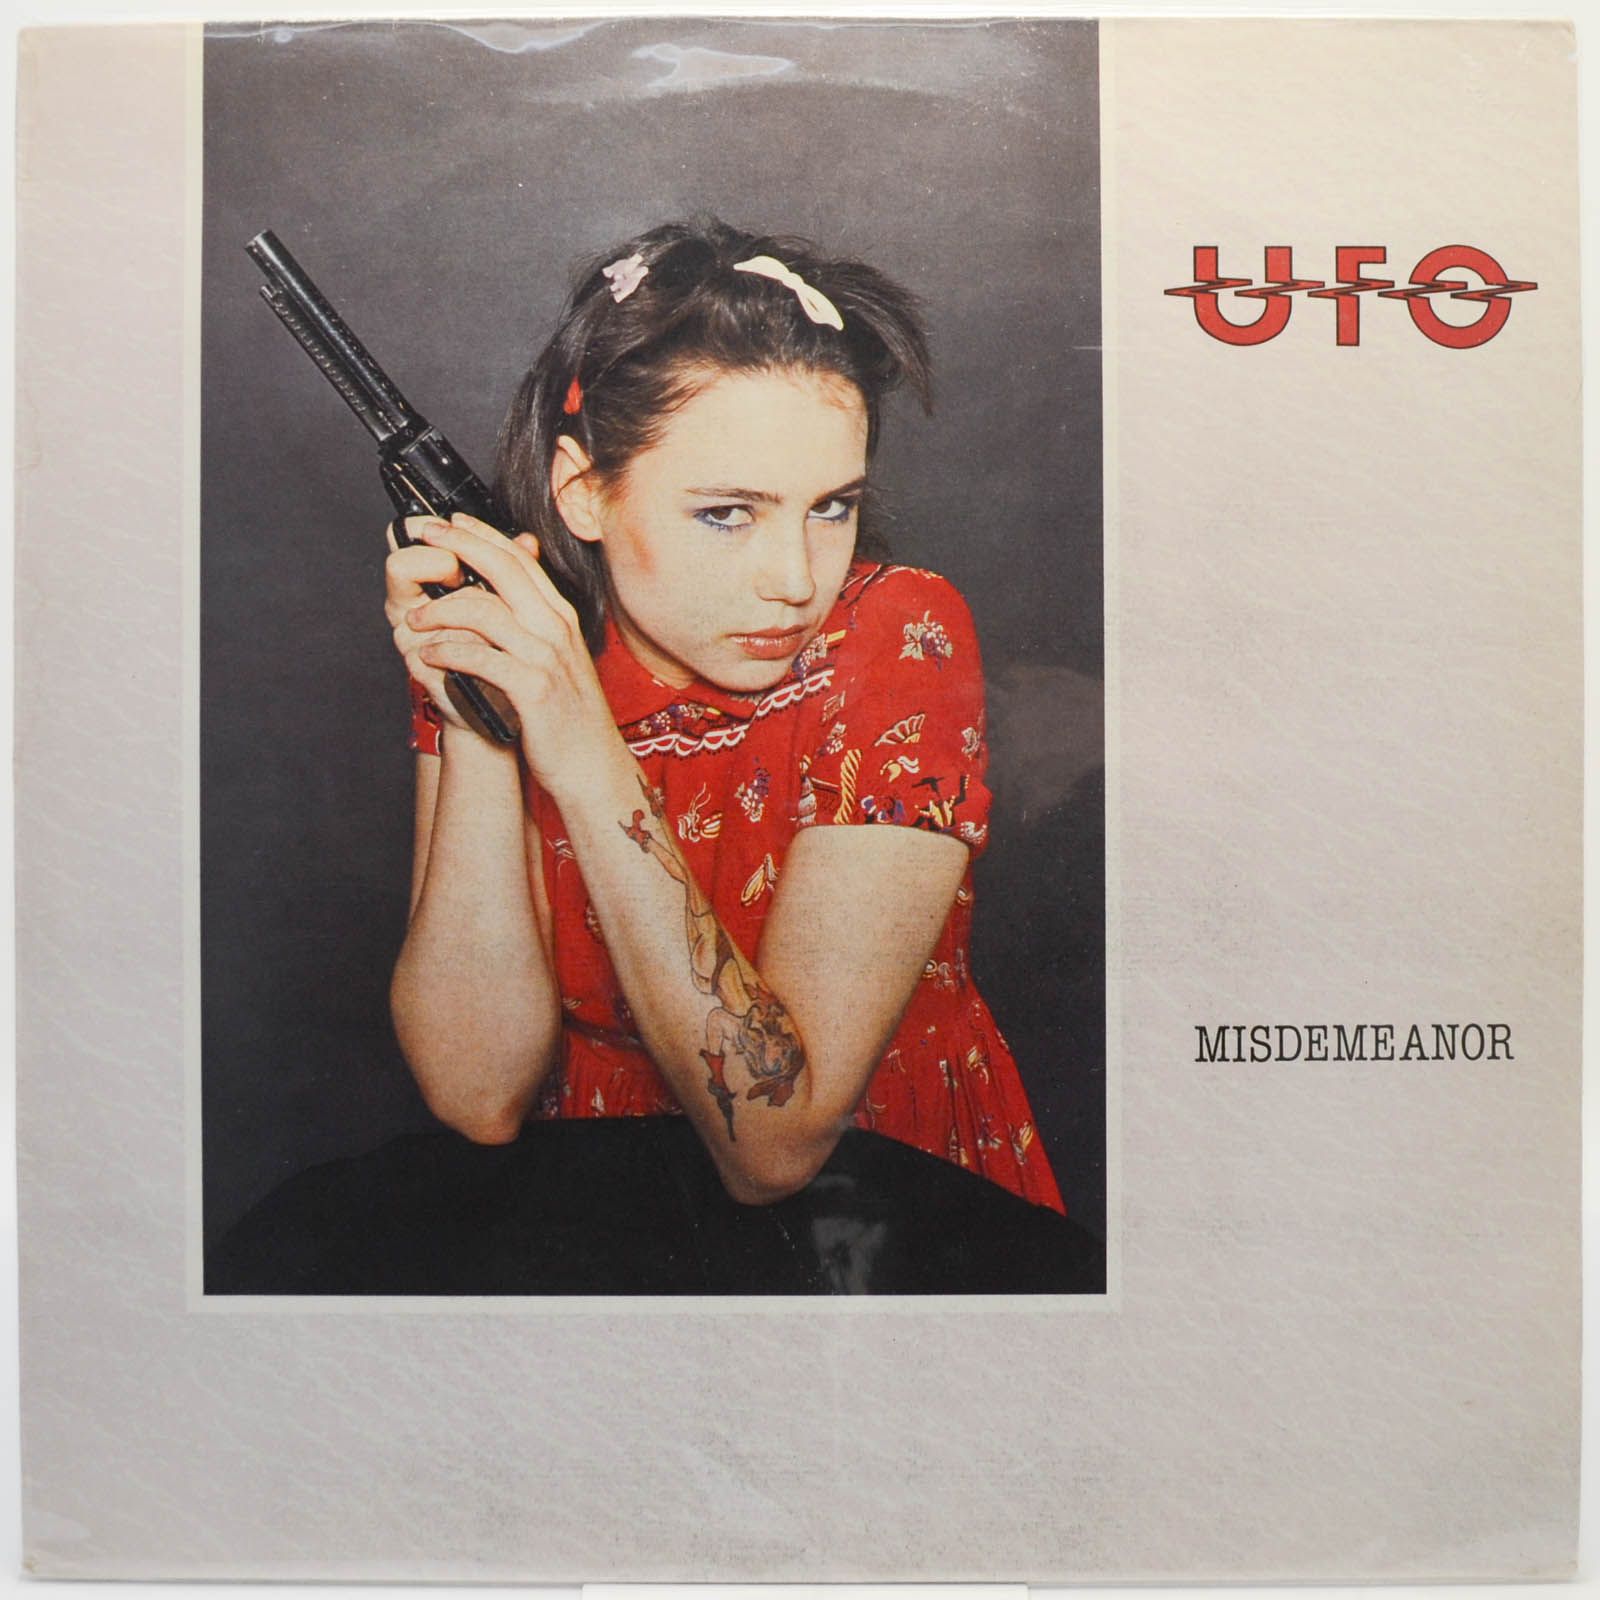 UFO — Misdemeanor (1-st, UK), 1985